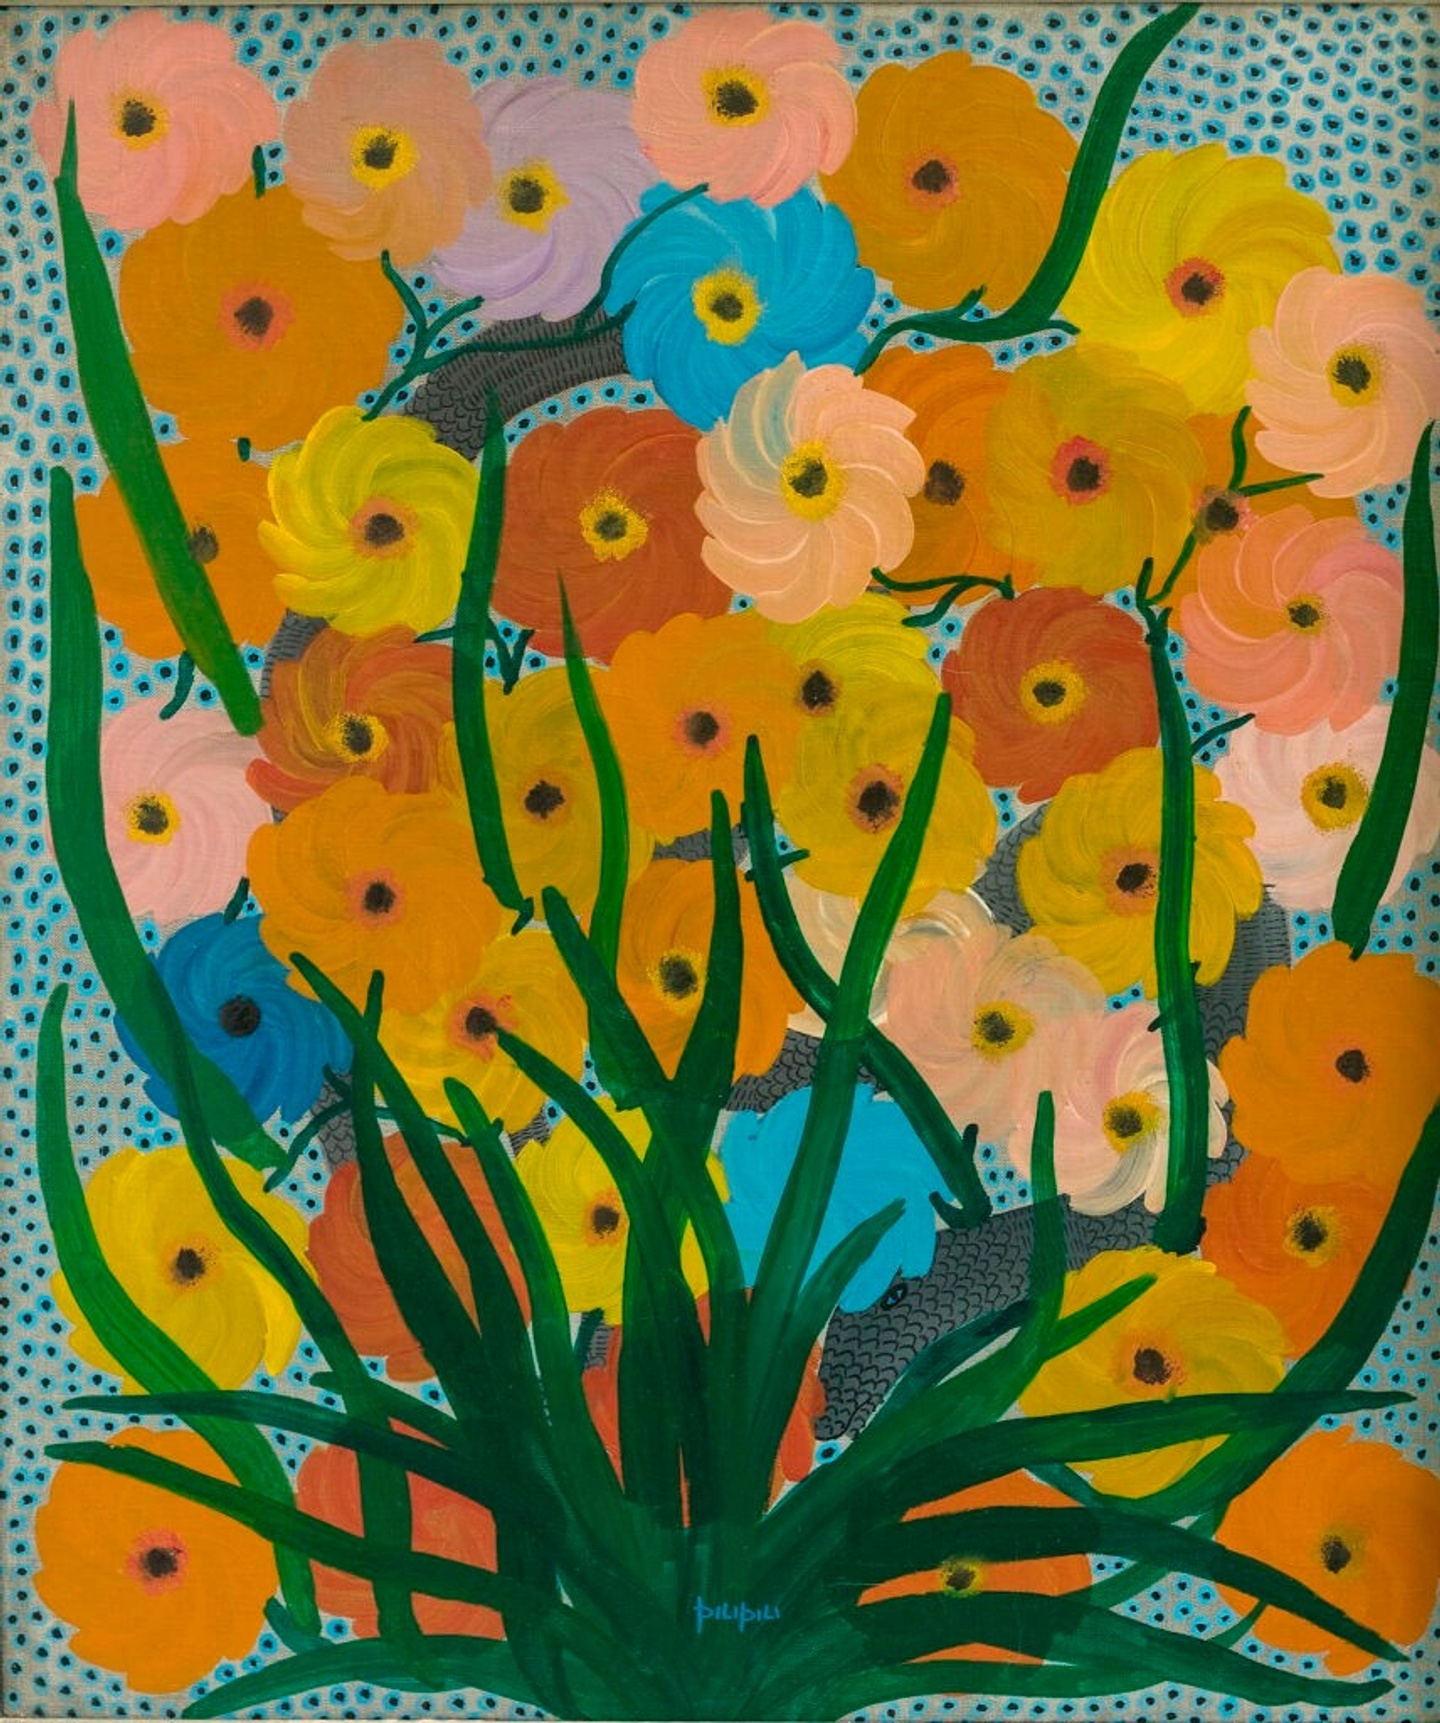 Pilipili Mulongoy, “Snake Amid Flowers,” ca. 1960. Acrylic on Masonite board, 23 ¼ x 19 ¾ in. Fisk University Galleries, Nashville, TN. Gift of the Harmon Foundation. (Courtesy of American Federation of Arts)